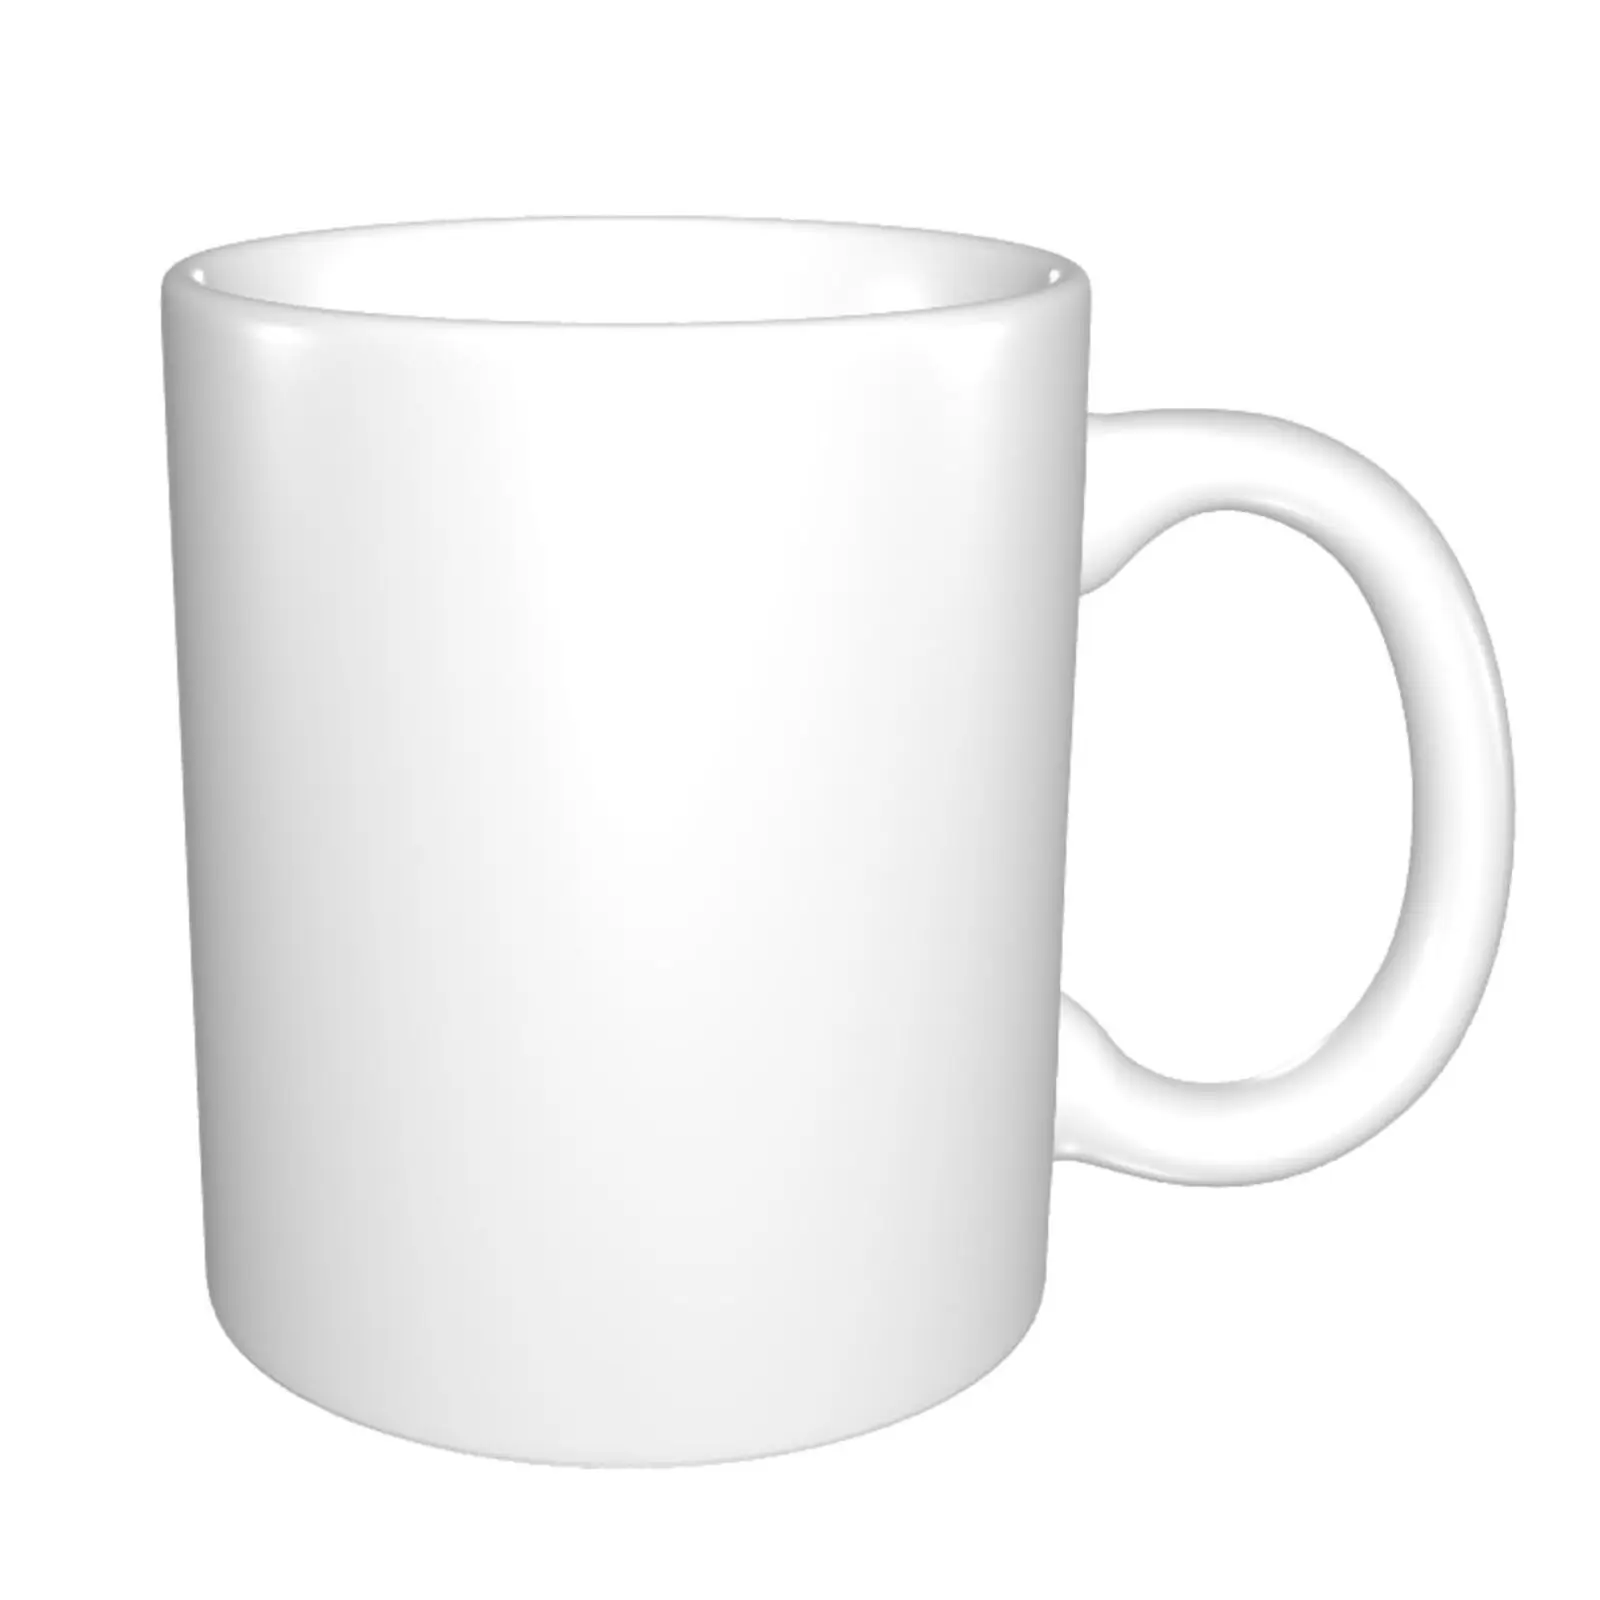 Jim Jones Drink Up Mug